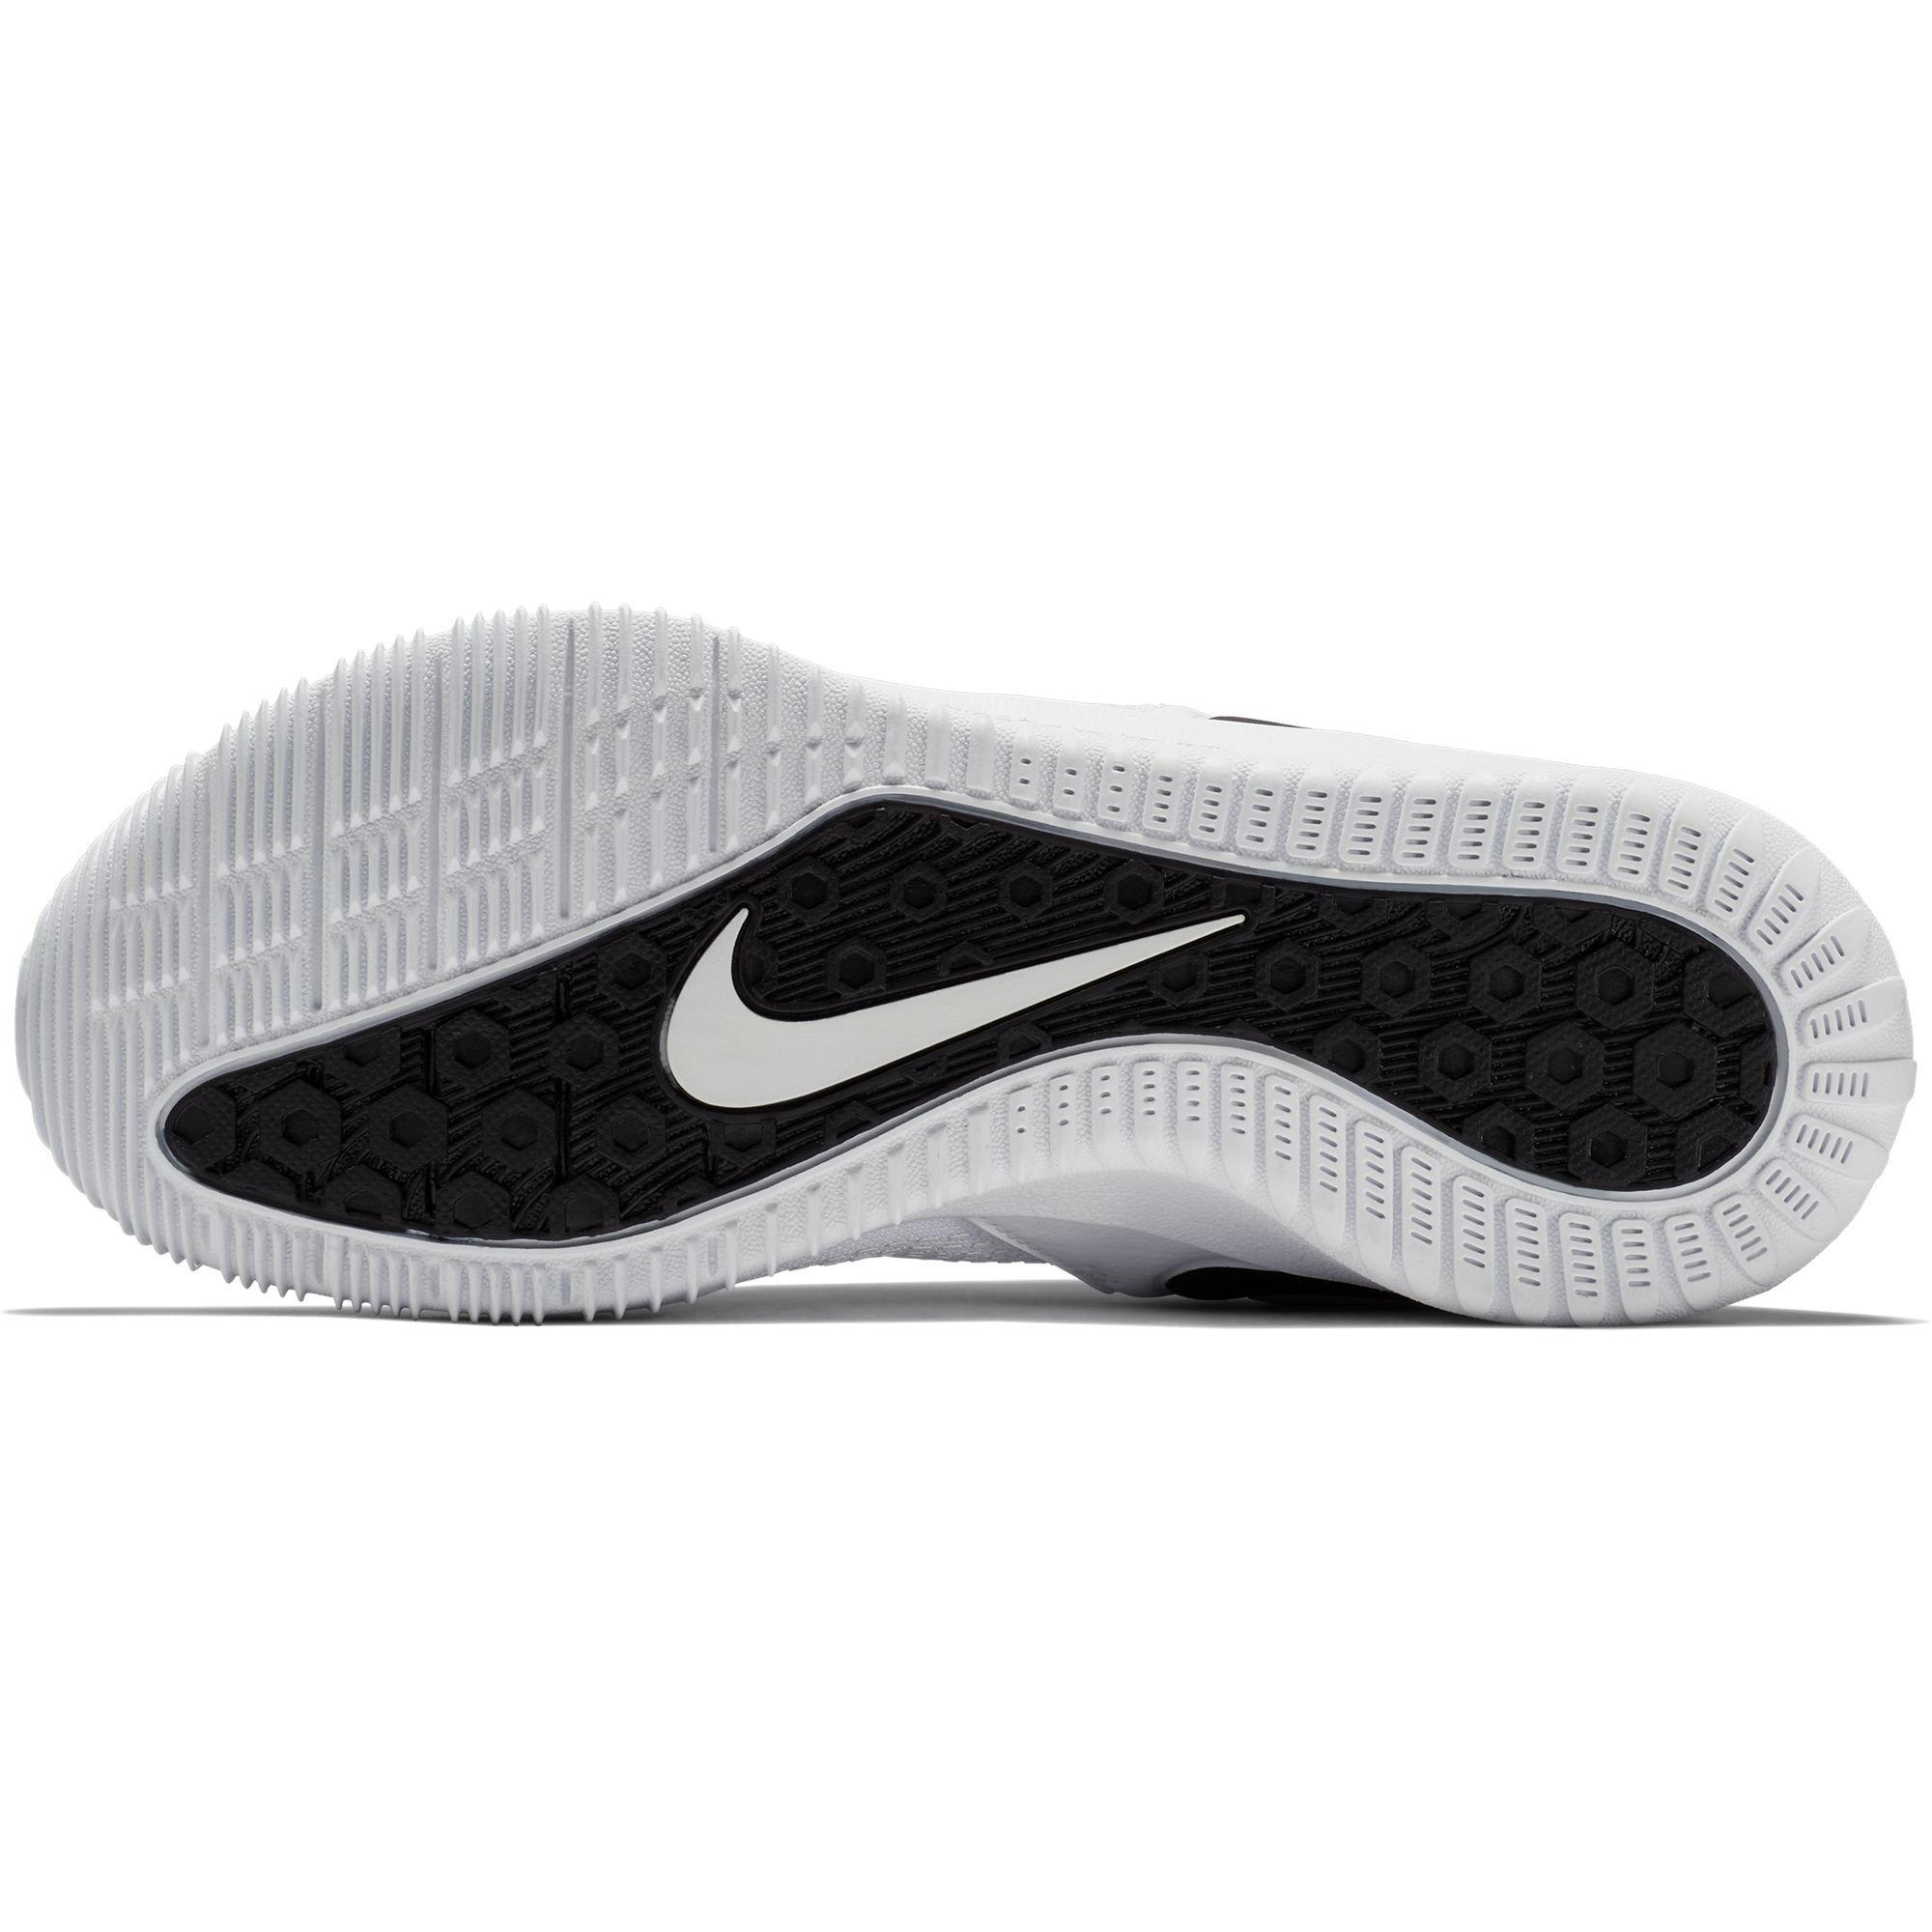 Nike HyperAce "White/Black" Women's Volleyball Shoe